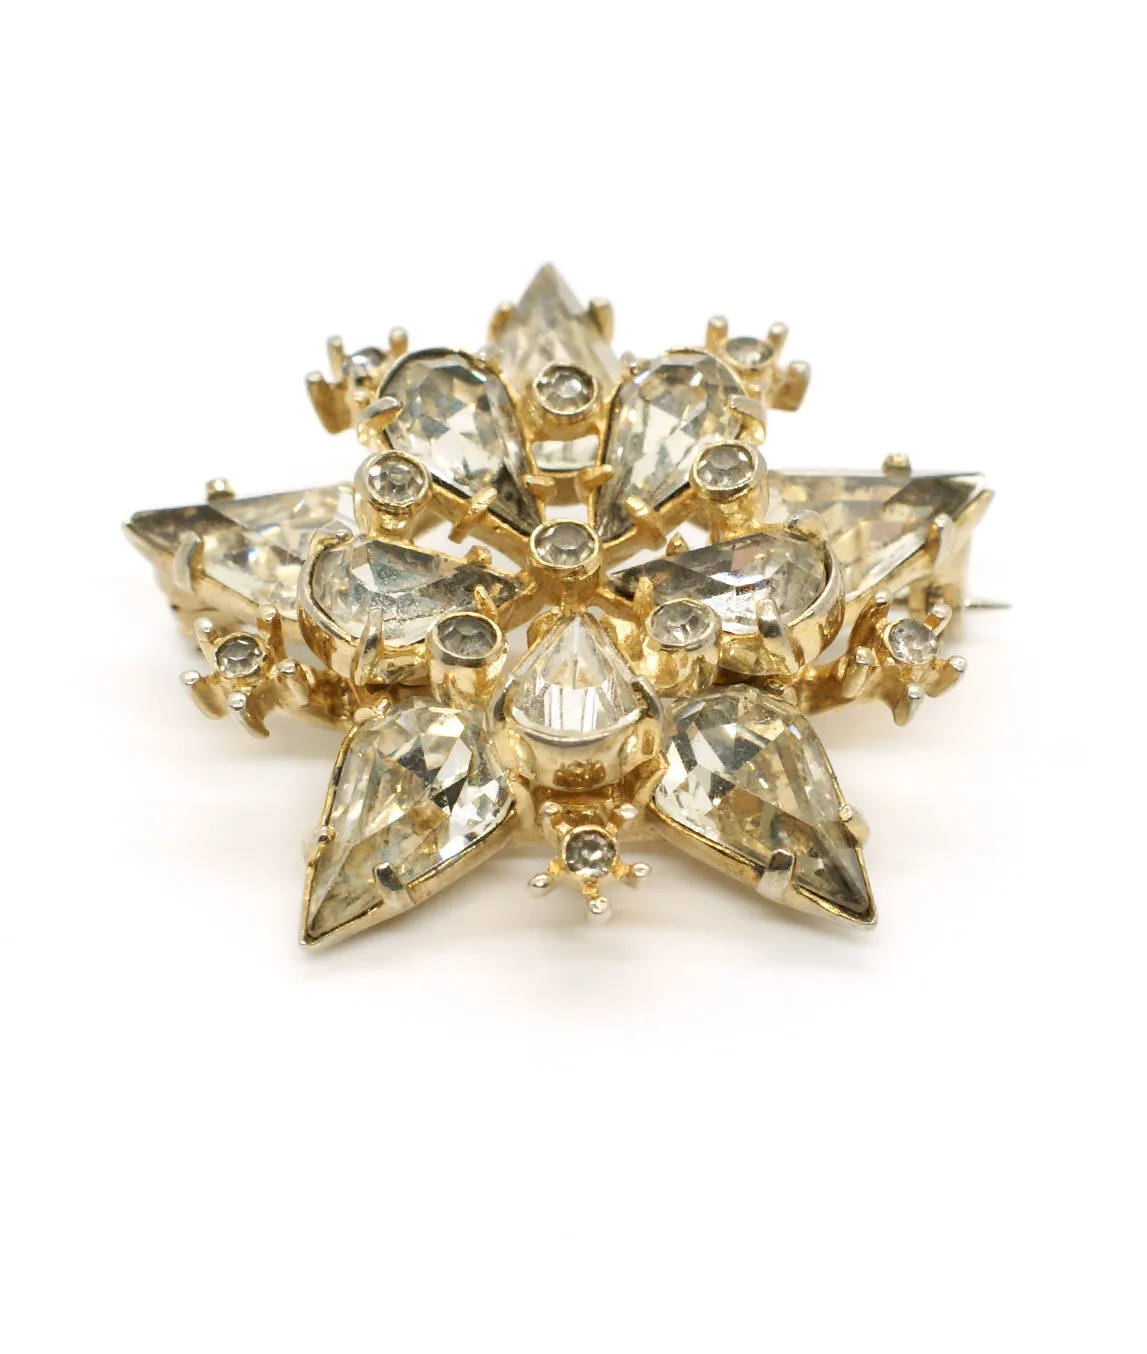 Silver-gilt star pin by Eisenberg